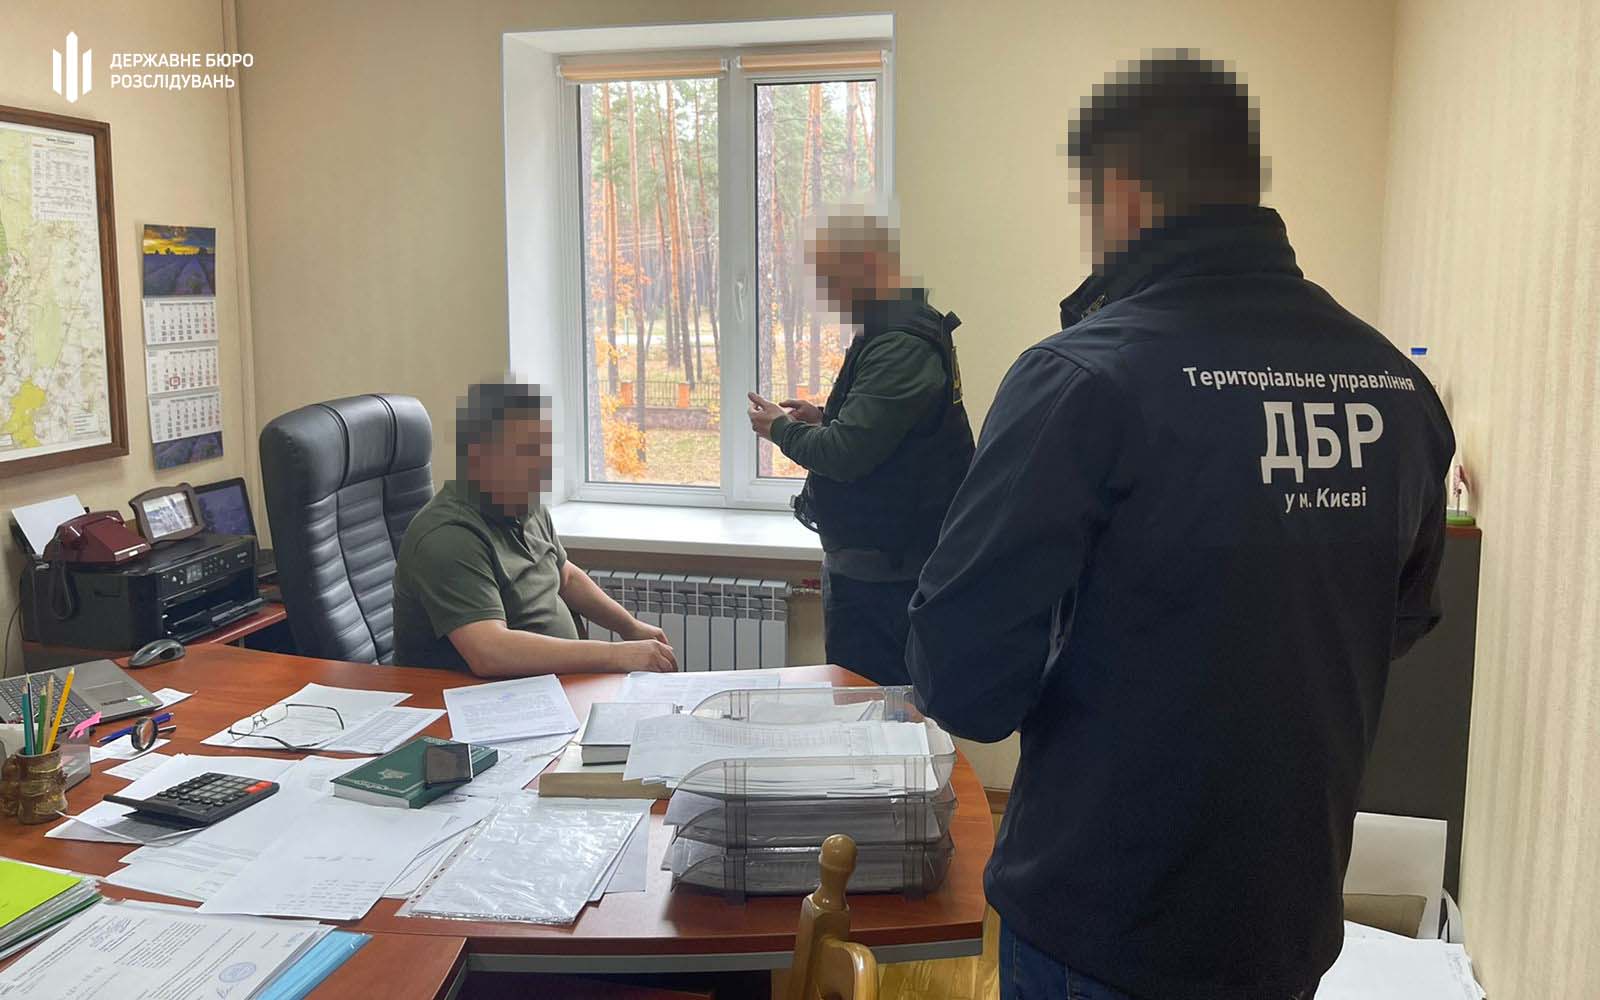 ГБР подозревает сотрудника лесхоза на Киевщине во взяточничестве (фото, видео)